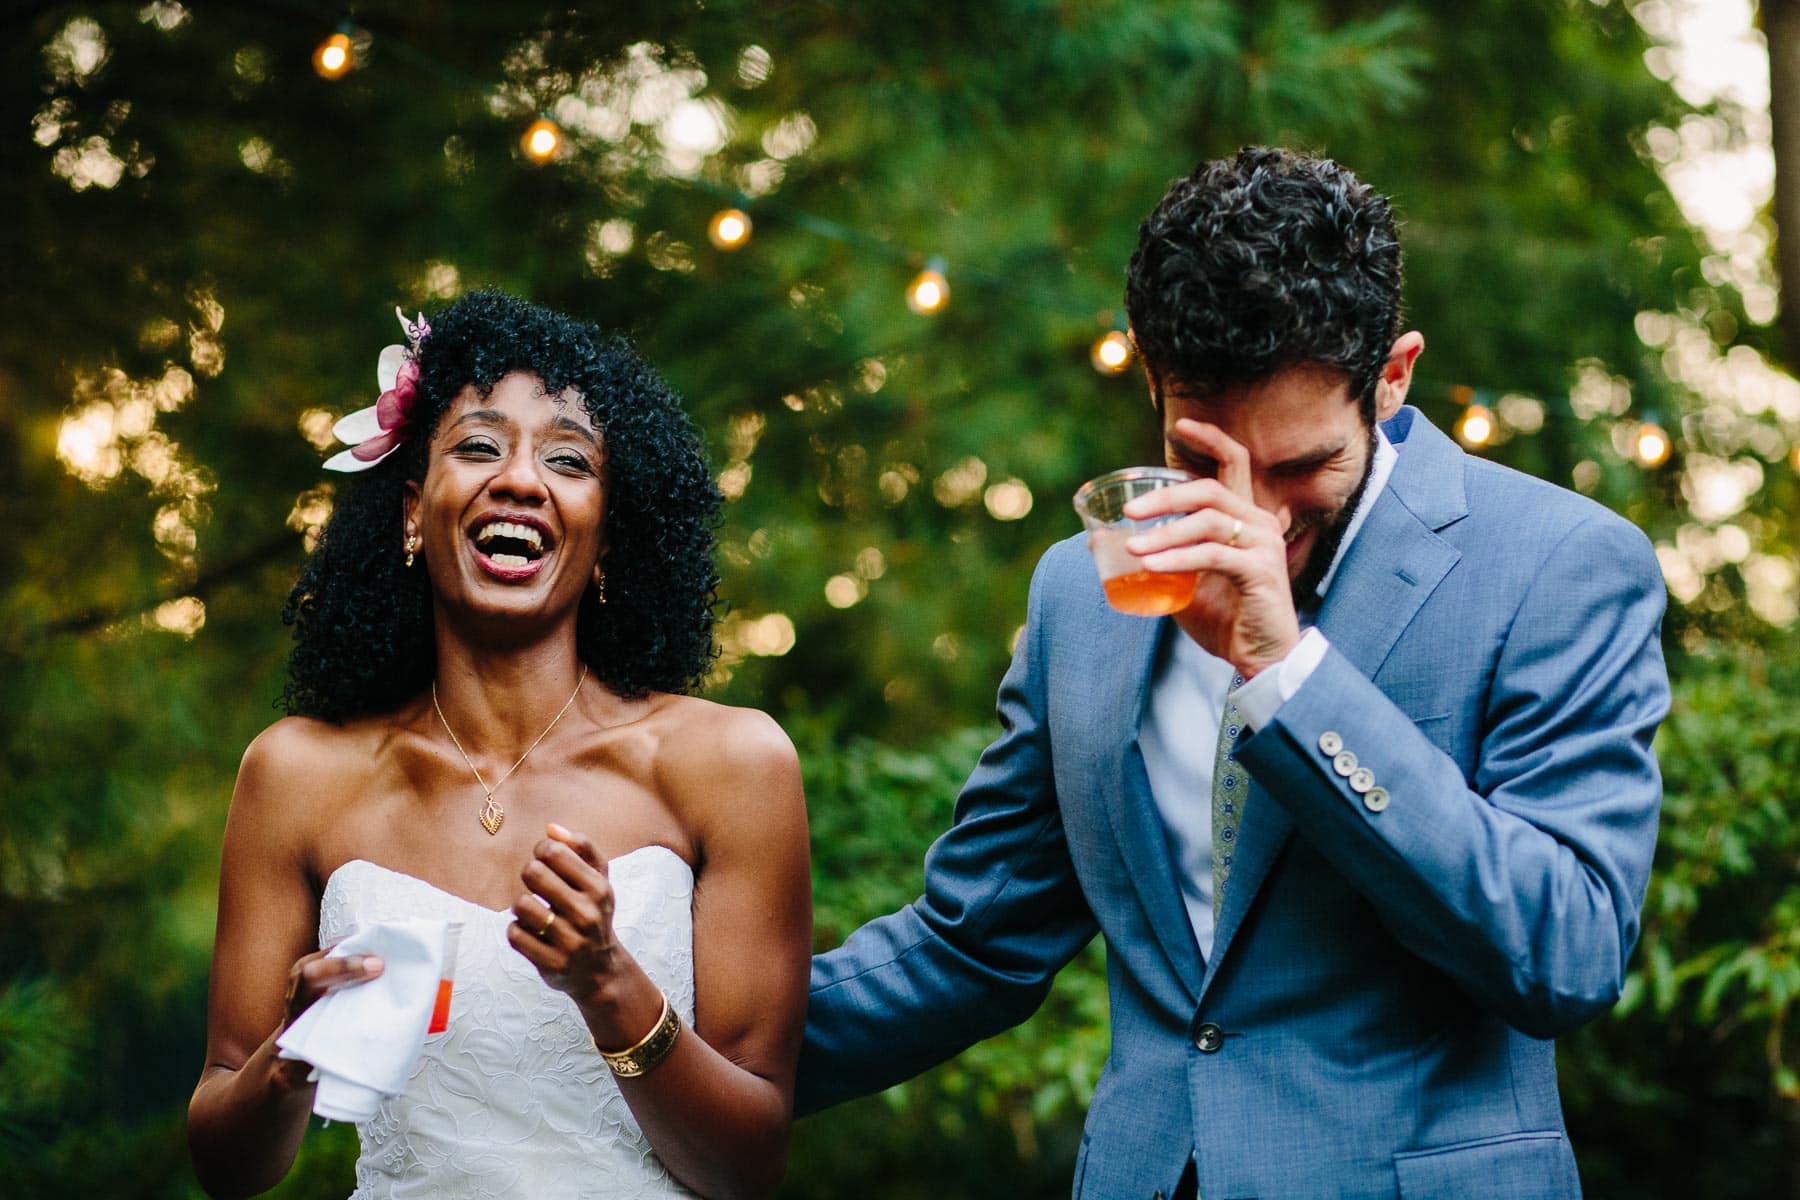 emotional reactions to toasts at a backyard Cambridge wedding | Kelly Benvenuto Photography